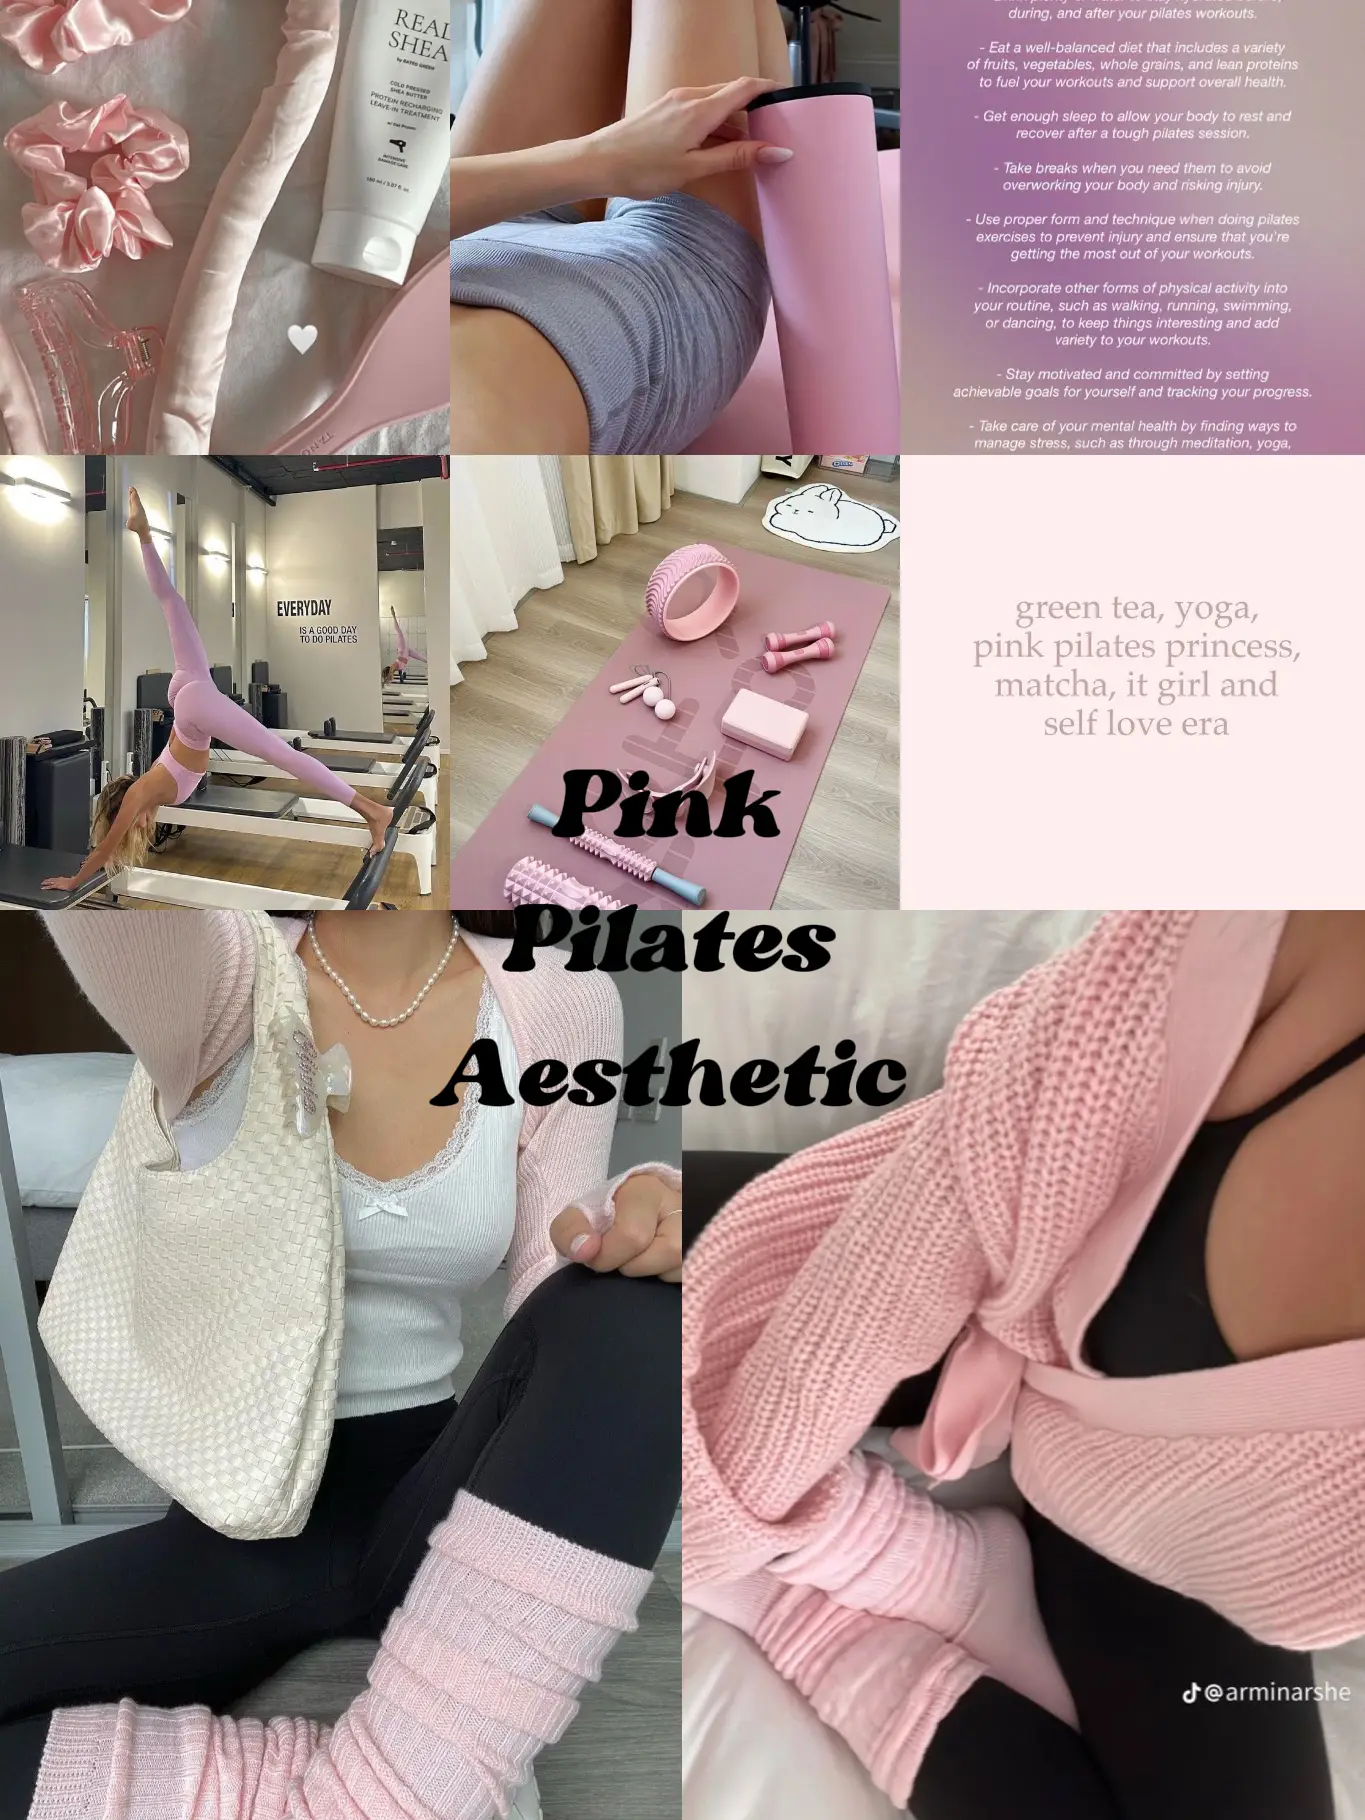 pink pilates princess workout station setup